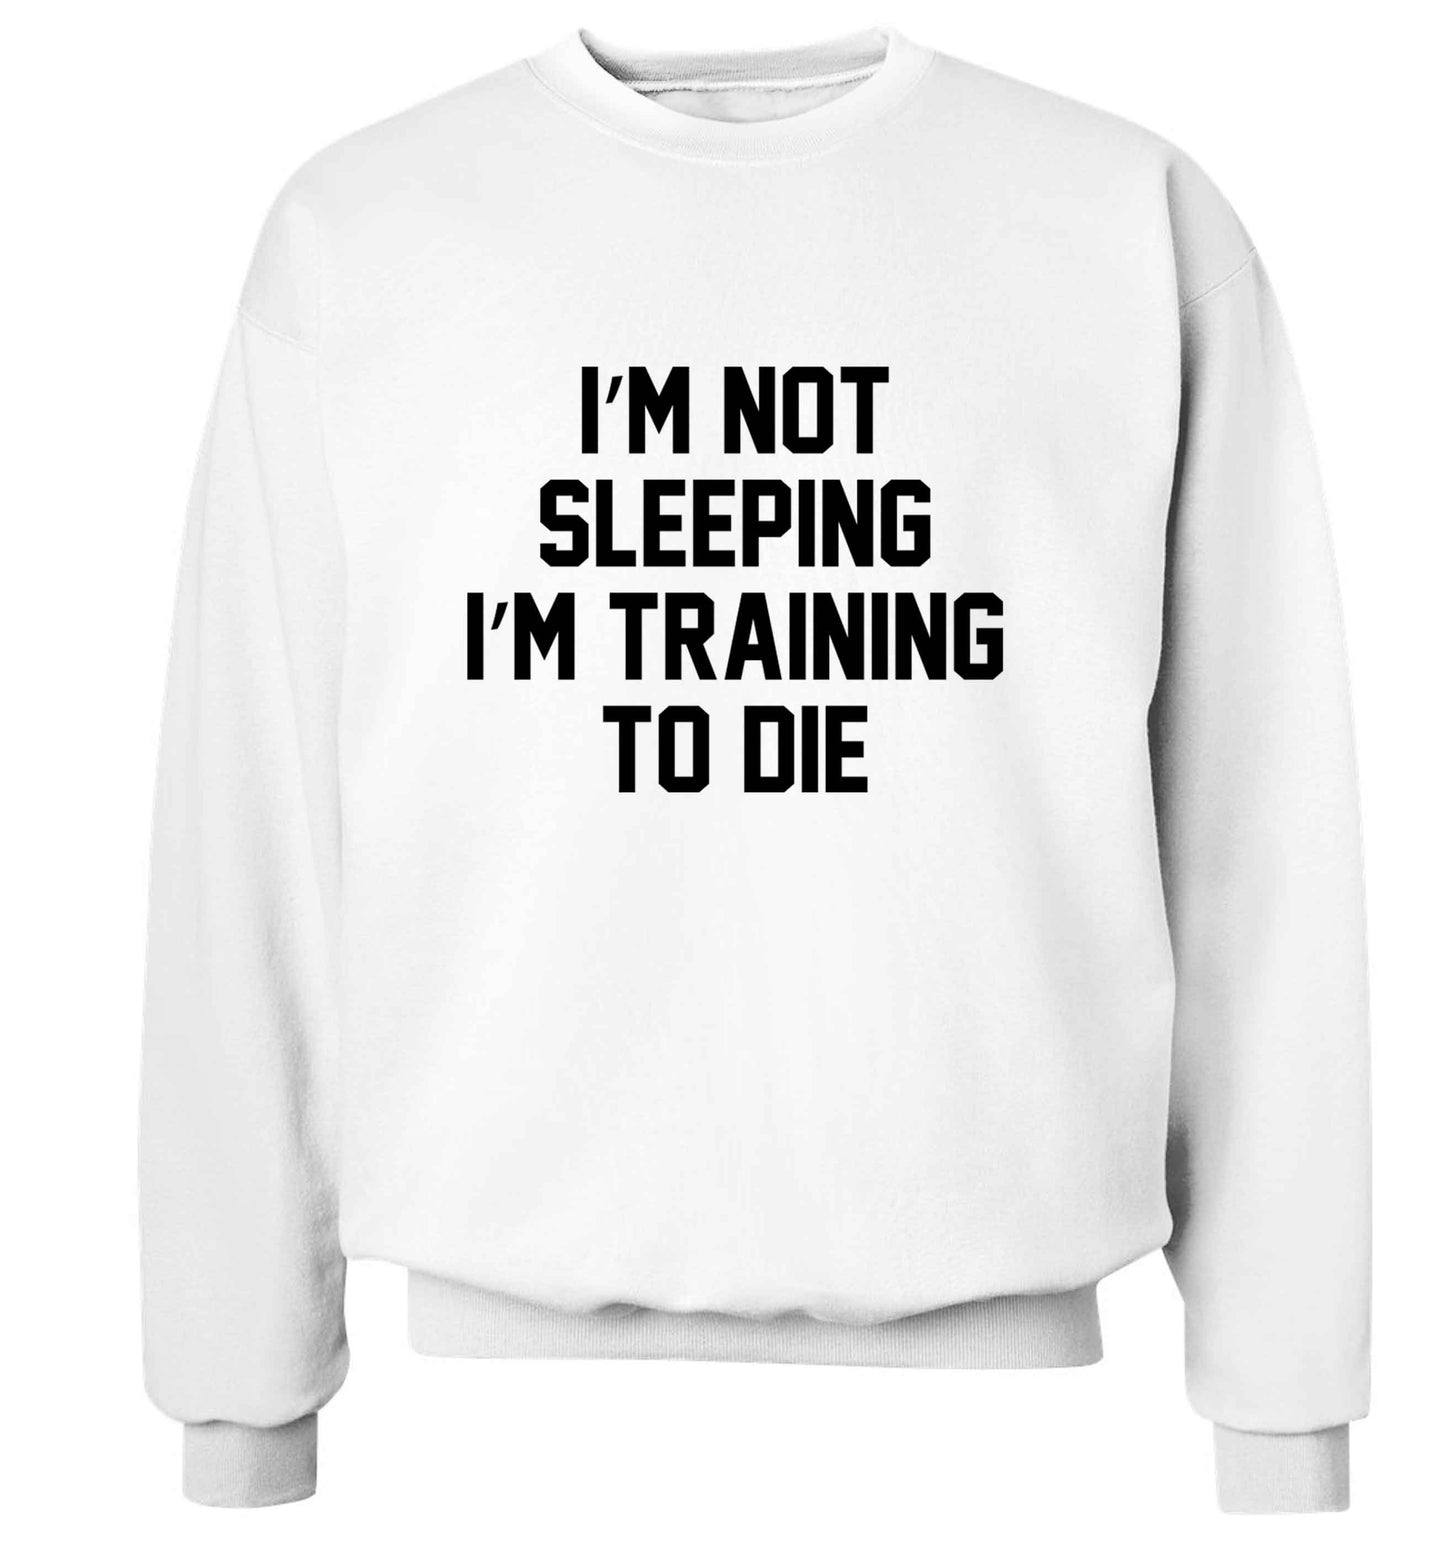 I'm not sleeping I'm training to die adult's unisex white sweater 2XL